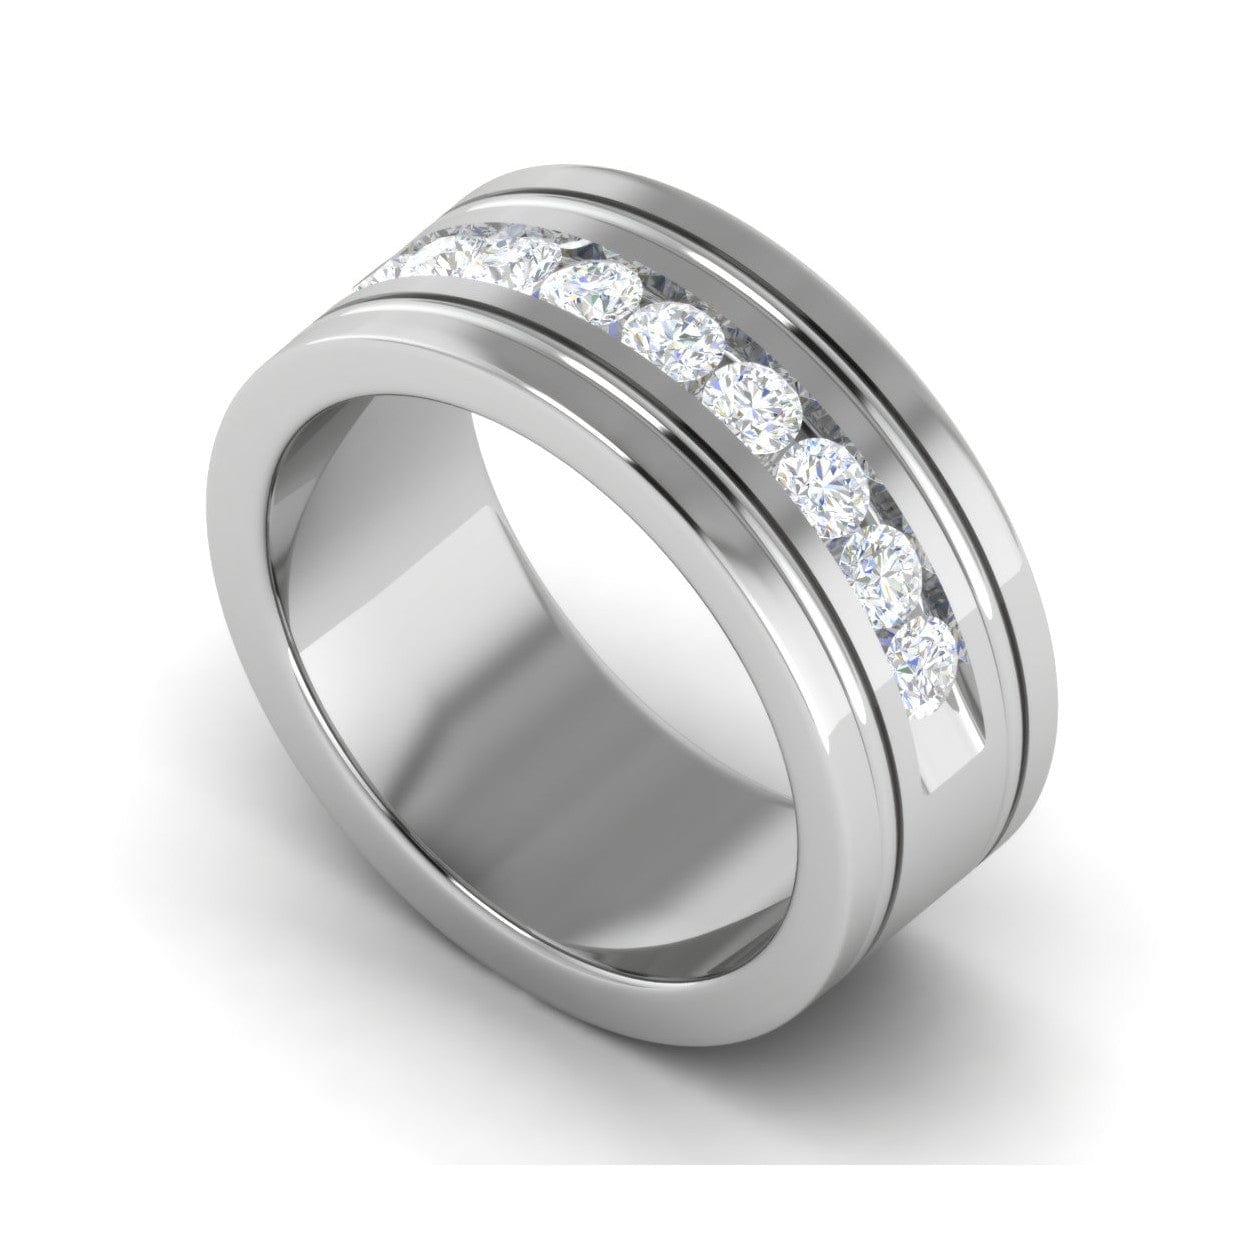 Designer Platinum Mens Wedding Bands – Mens Wedding Rings